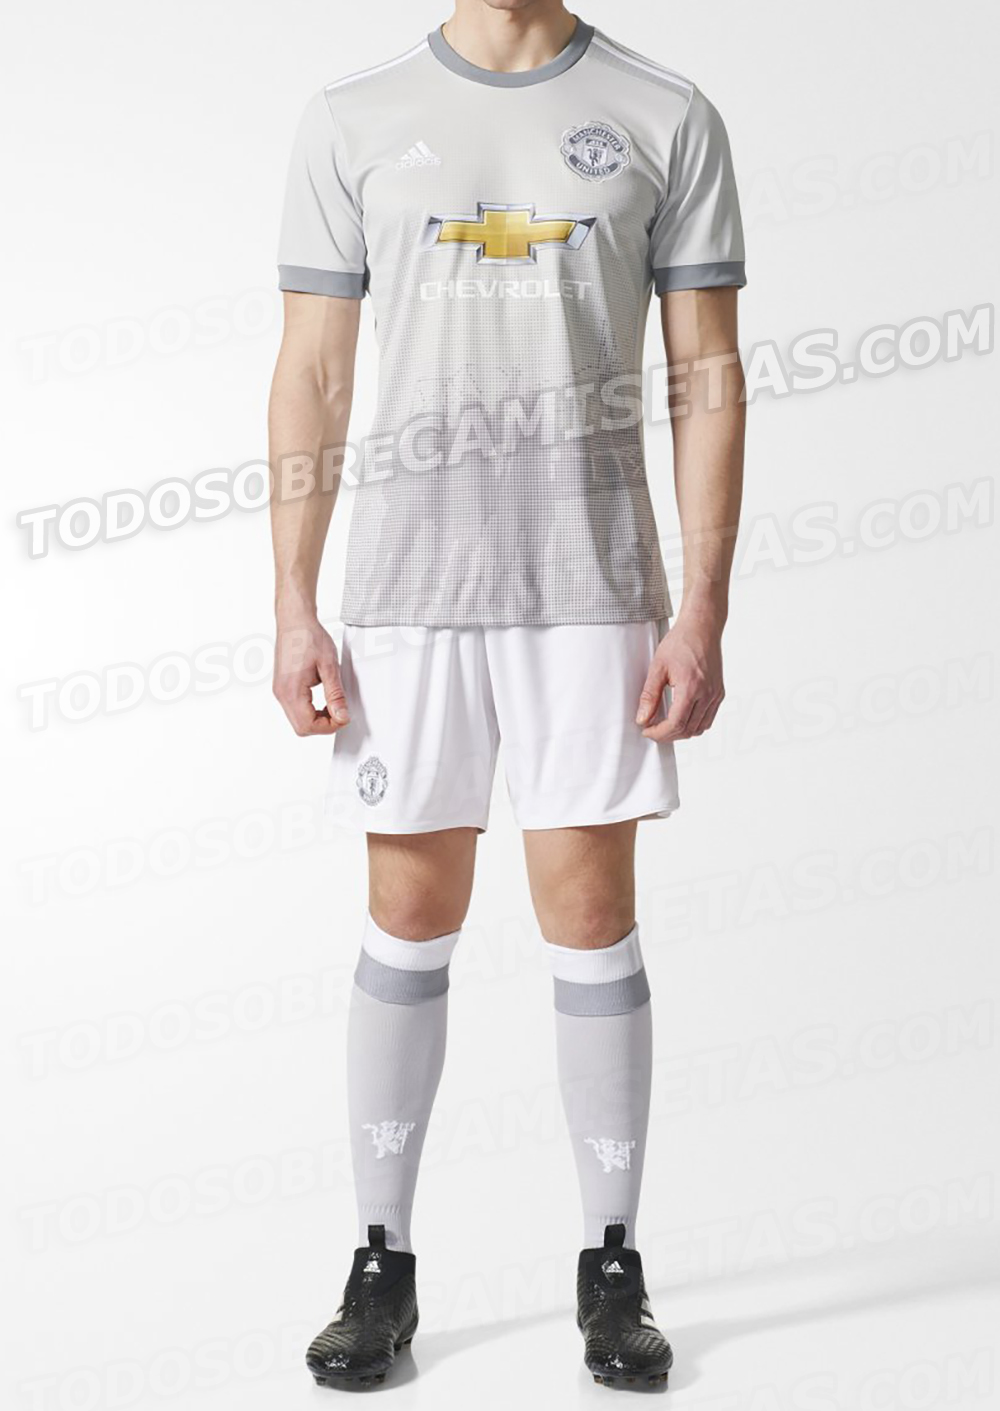 Manchester United 2017-18 adidas Third Kit